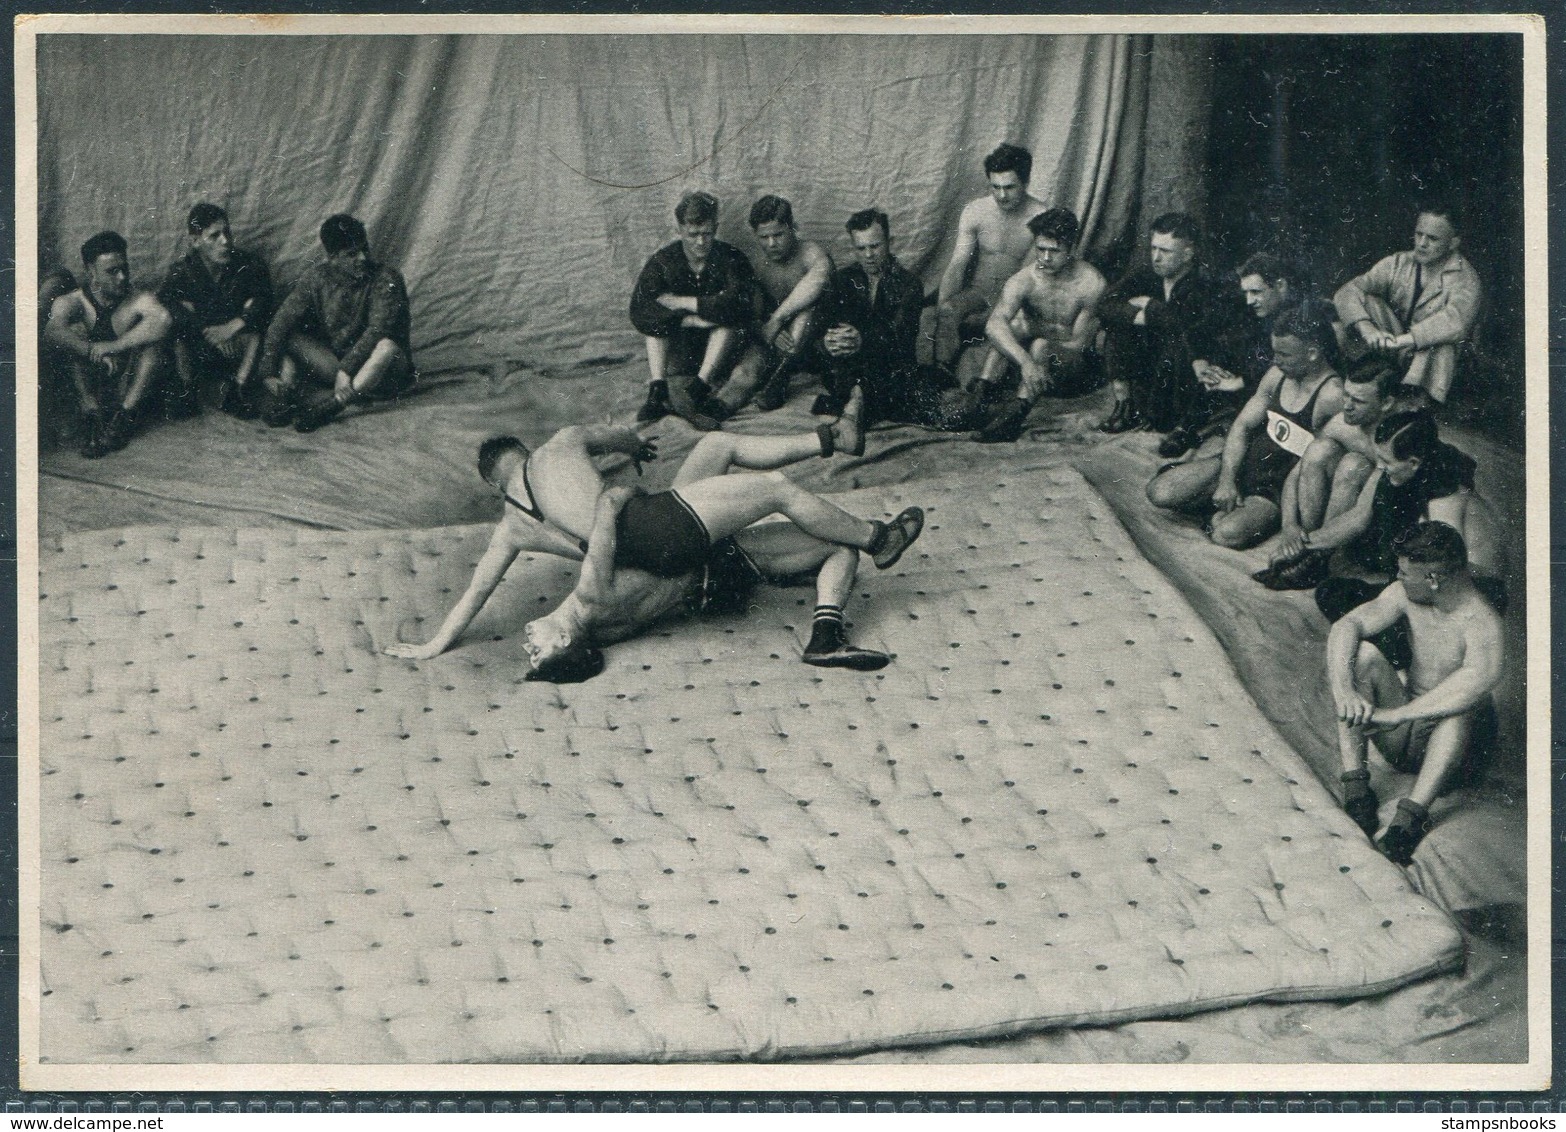 1936 Germany Berlin Olympics Olympia Sammelwerk 13 Bild 147 Gruppe 55 Wrestling - Trading Cards